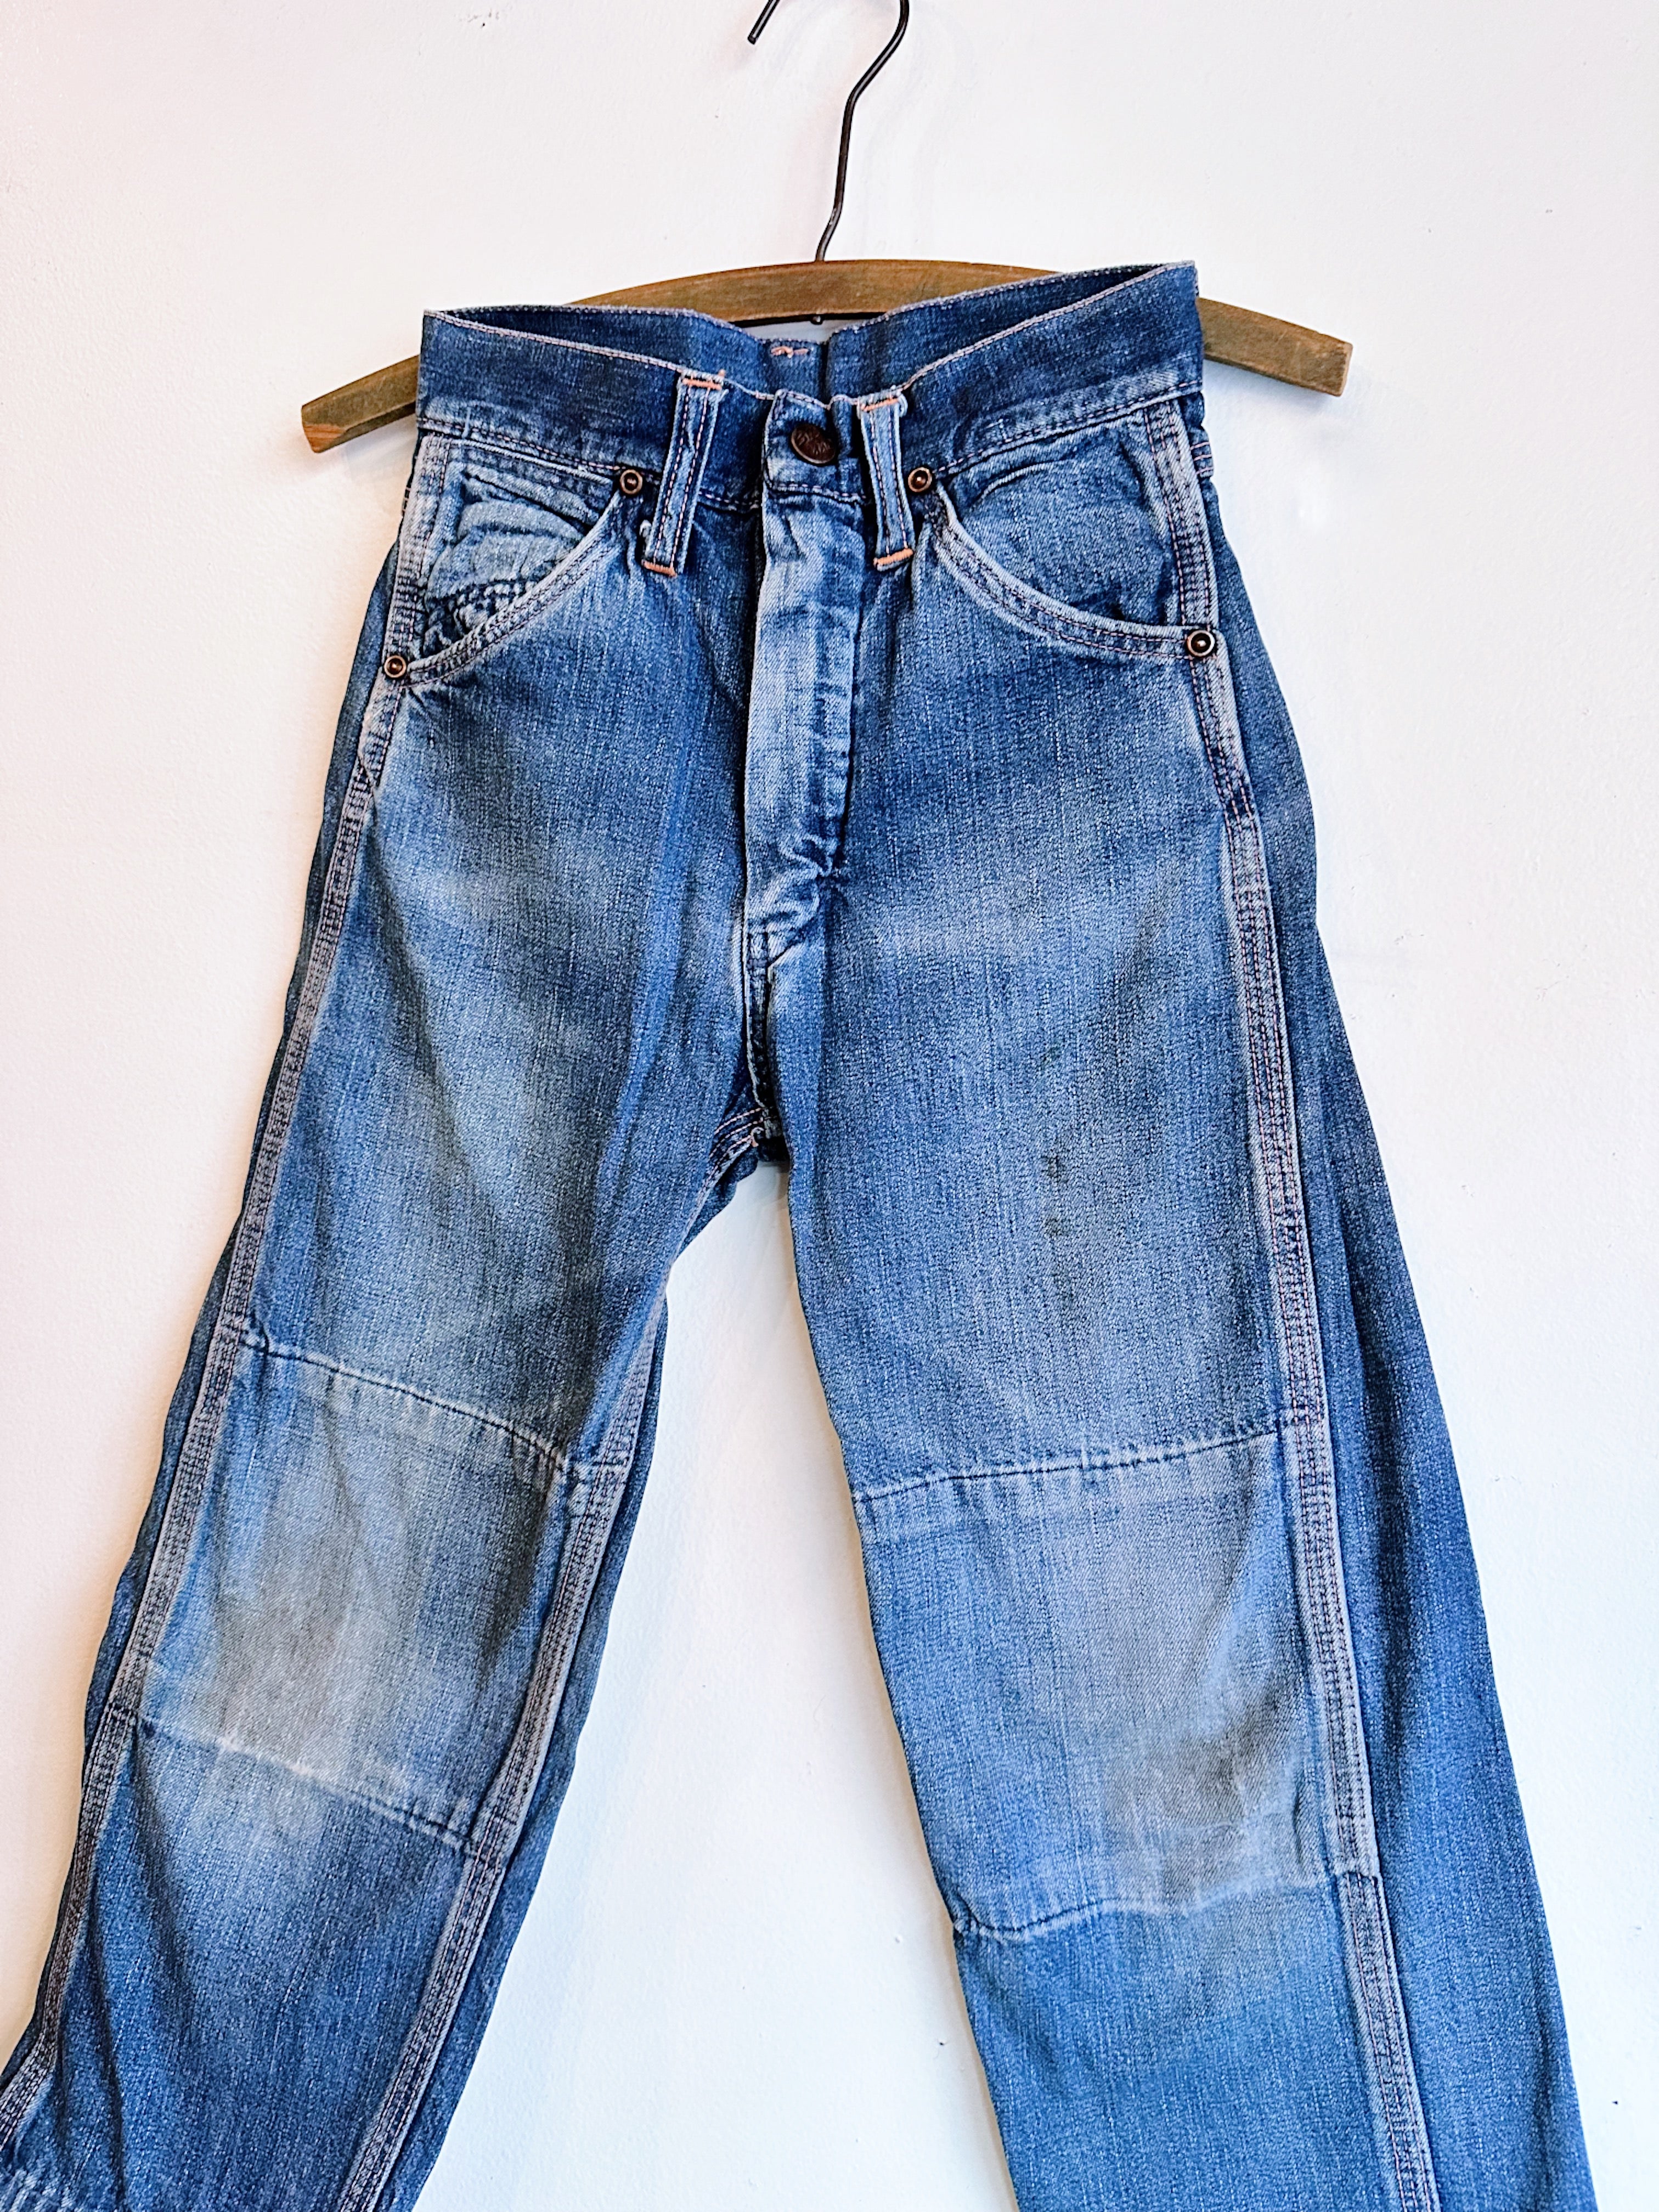 babeezworld Kids Fashionable Casual Wear Boy's Denim Jeans Half Blue Pant :  Amazon.in: Fashion